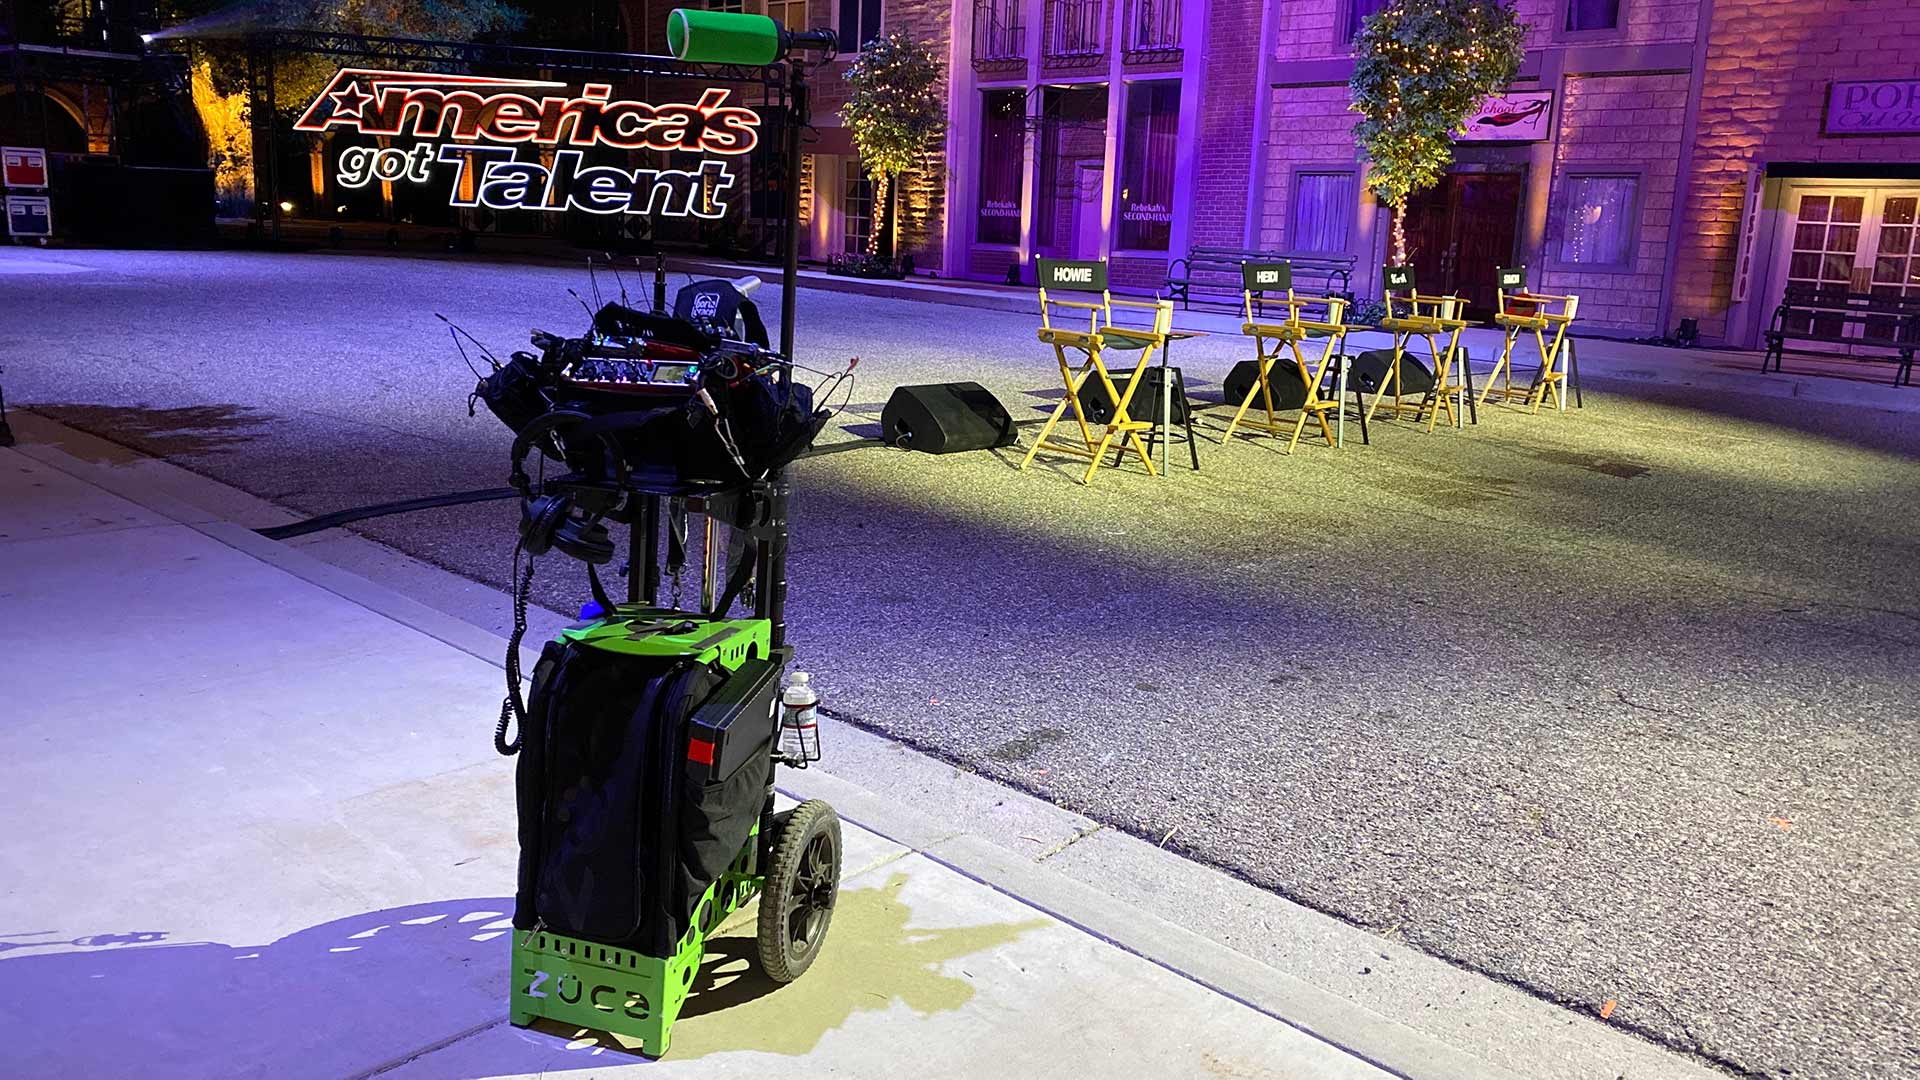 Sound Cart on America's Got Talent 2020